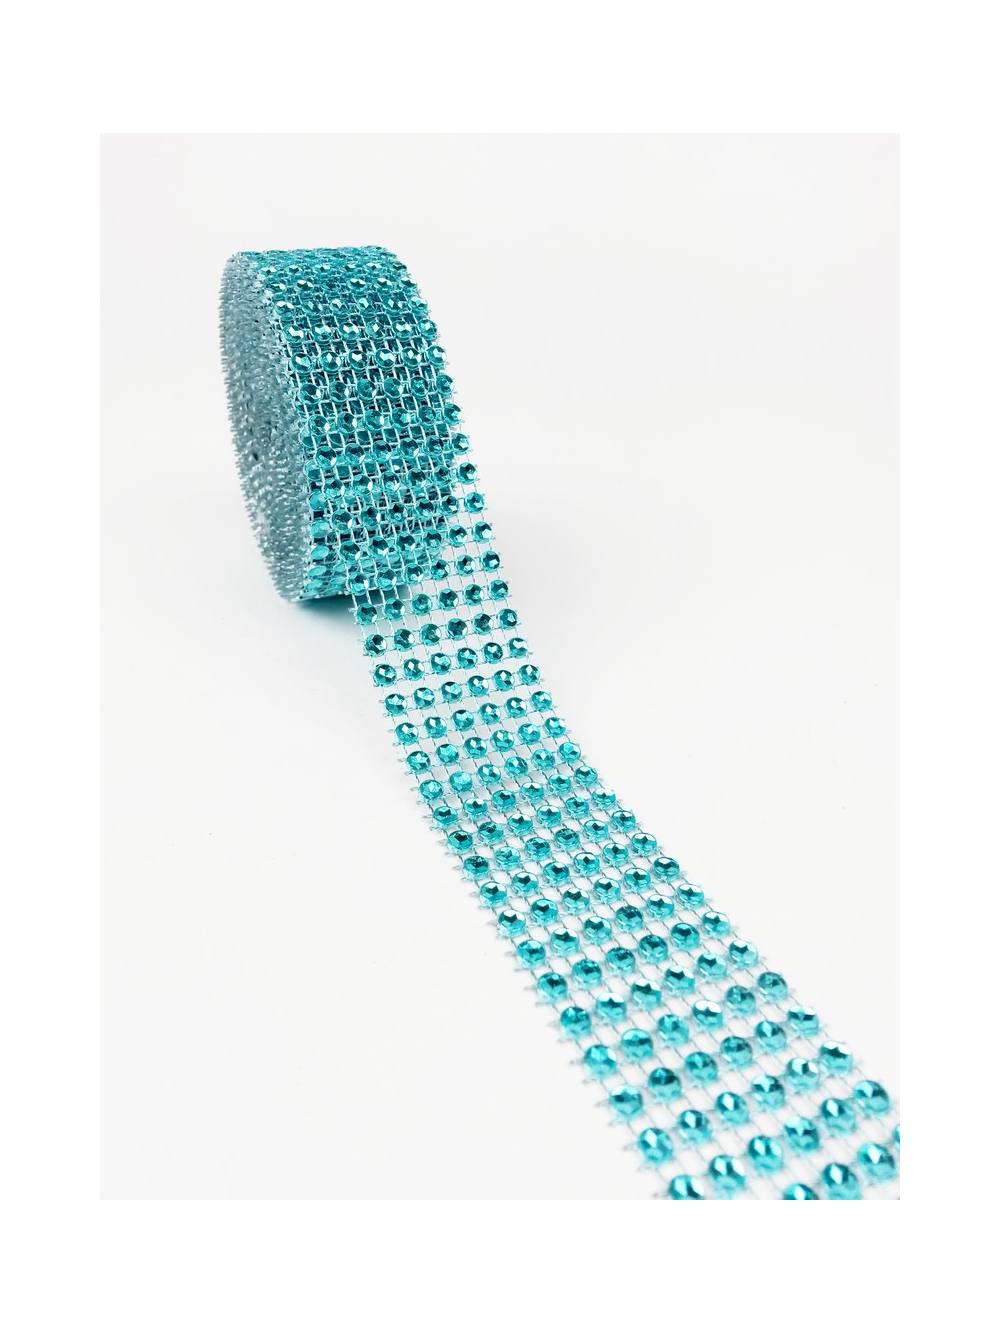 Obrázek k výrobku 16228 - Diamantový pás plastový bledo-modrý (3 cm x 4,57 m)